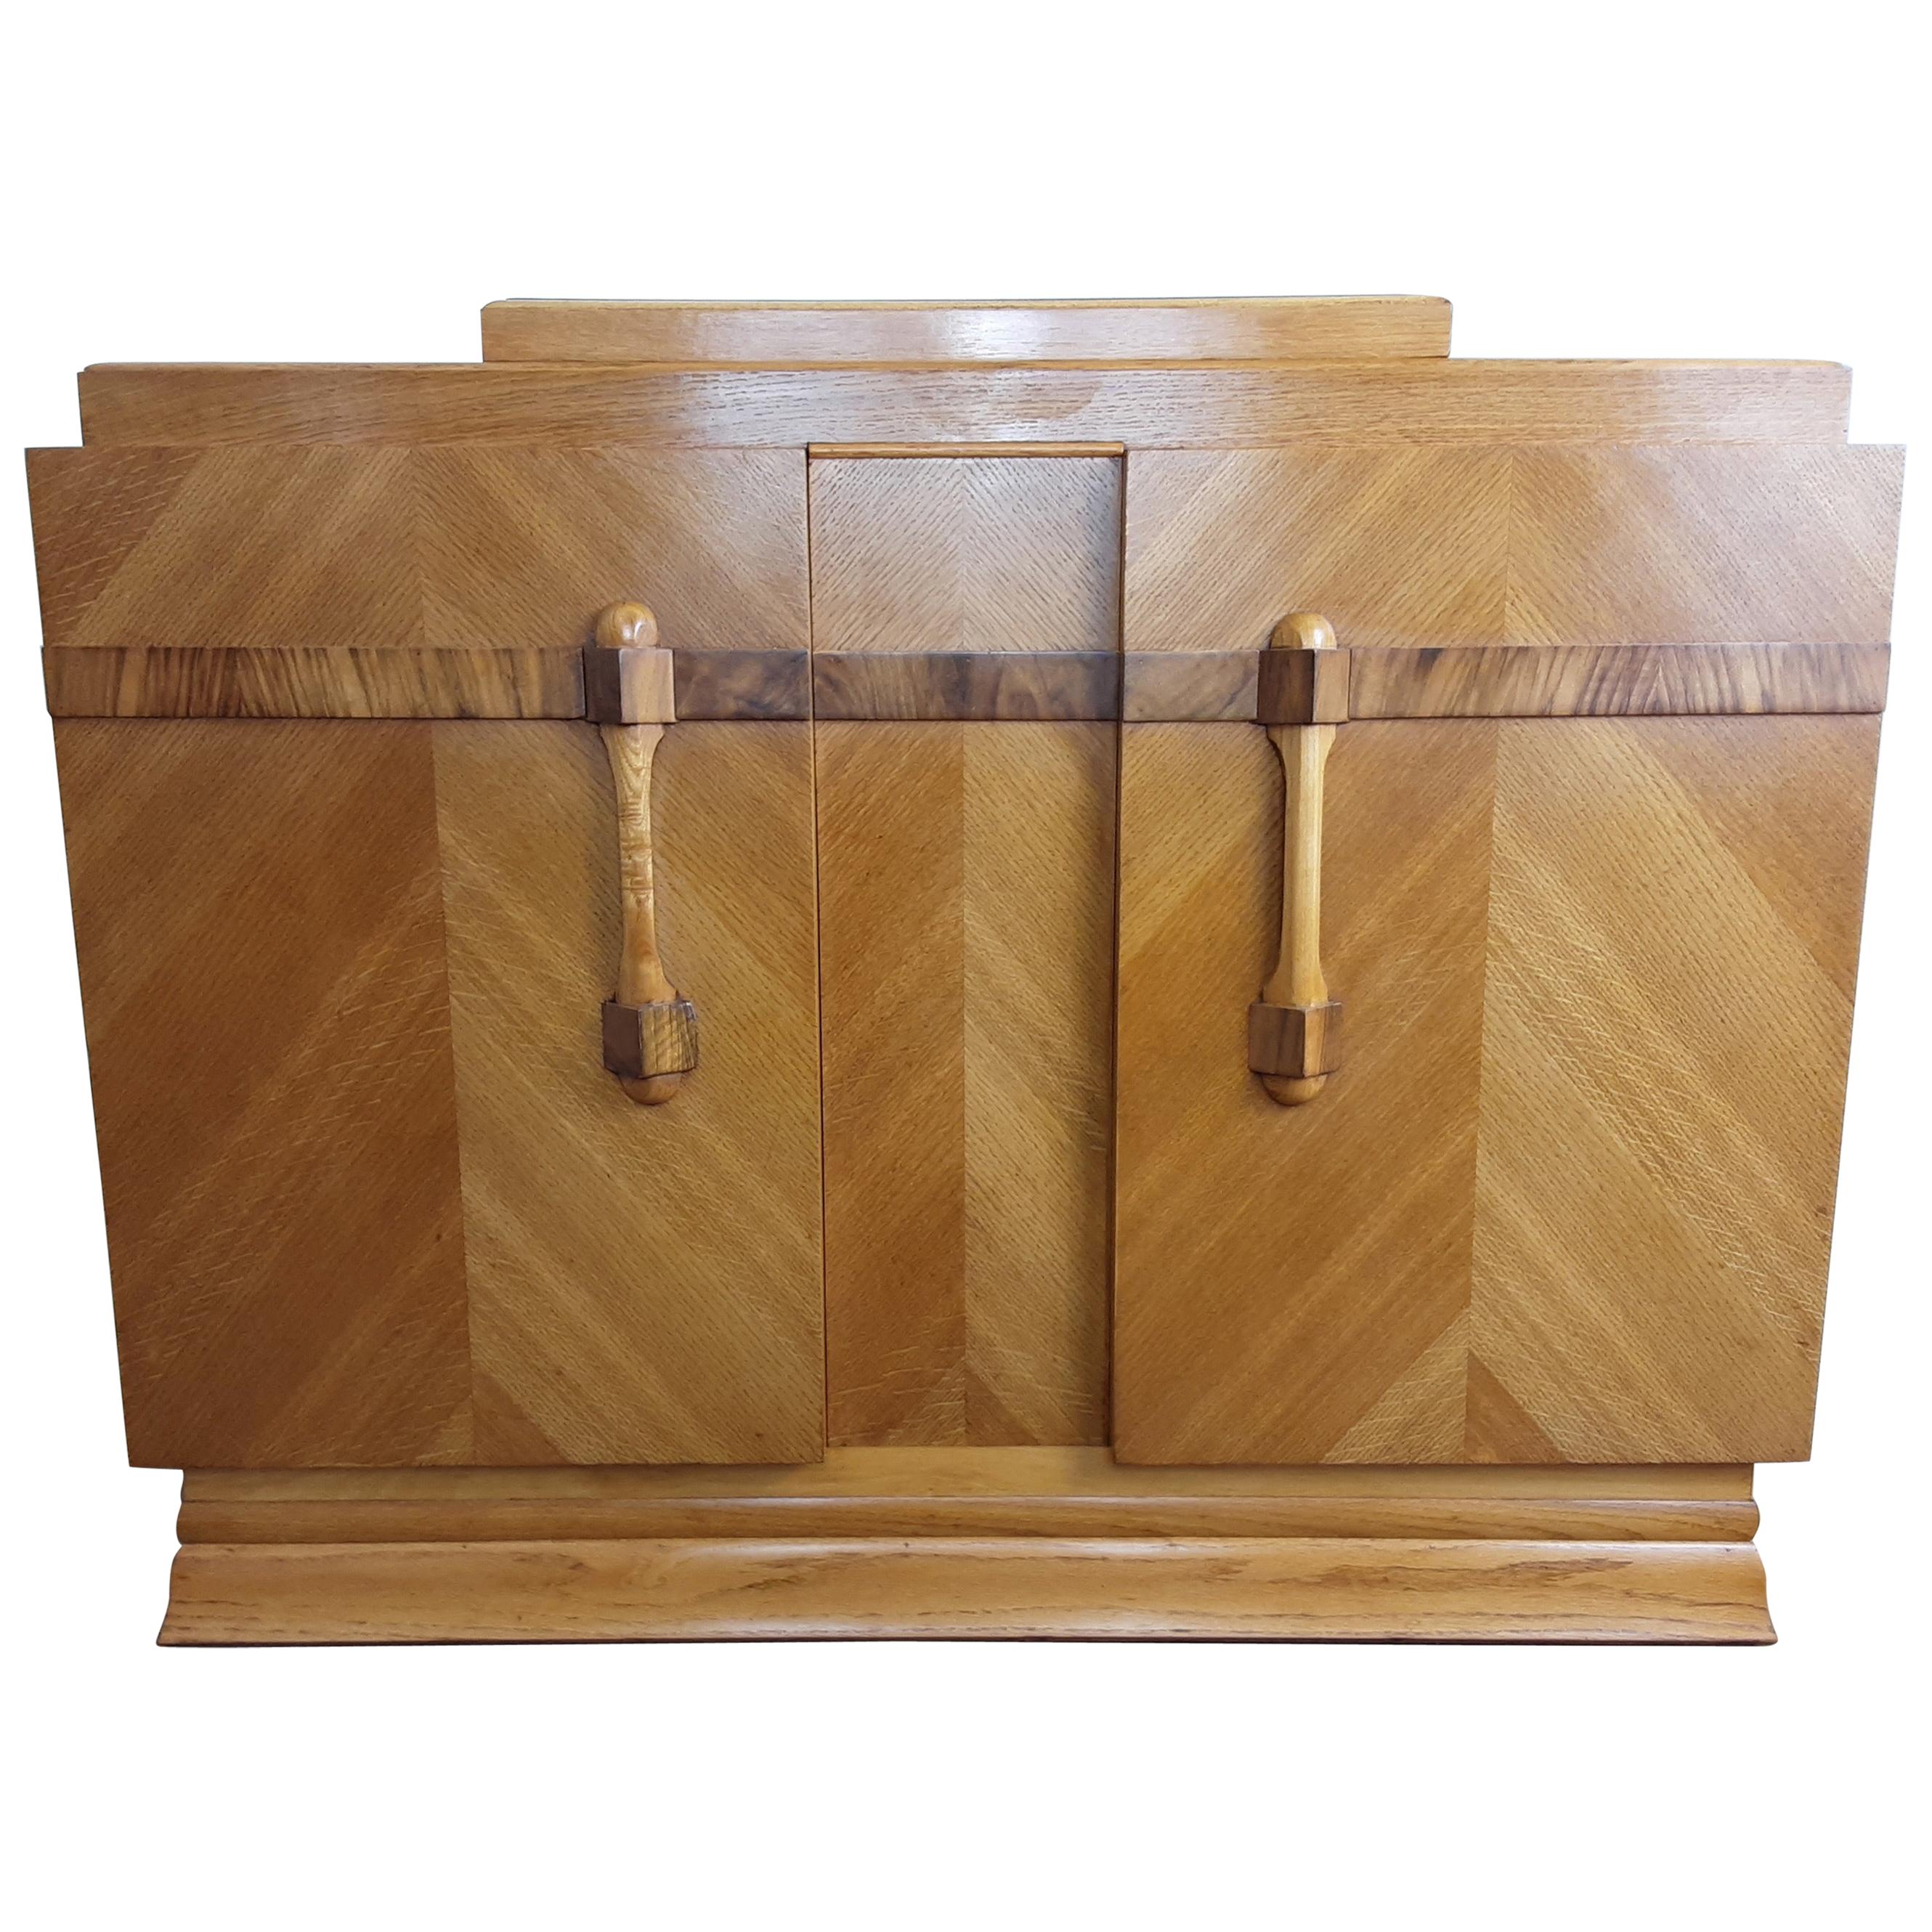 British Art Deco Golden Oak Sideboard Dry Bar with Cutlery Storage Box on Top